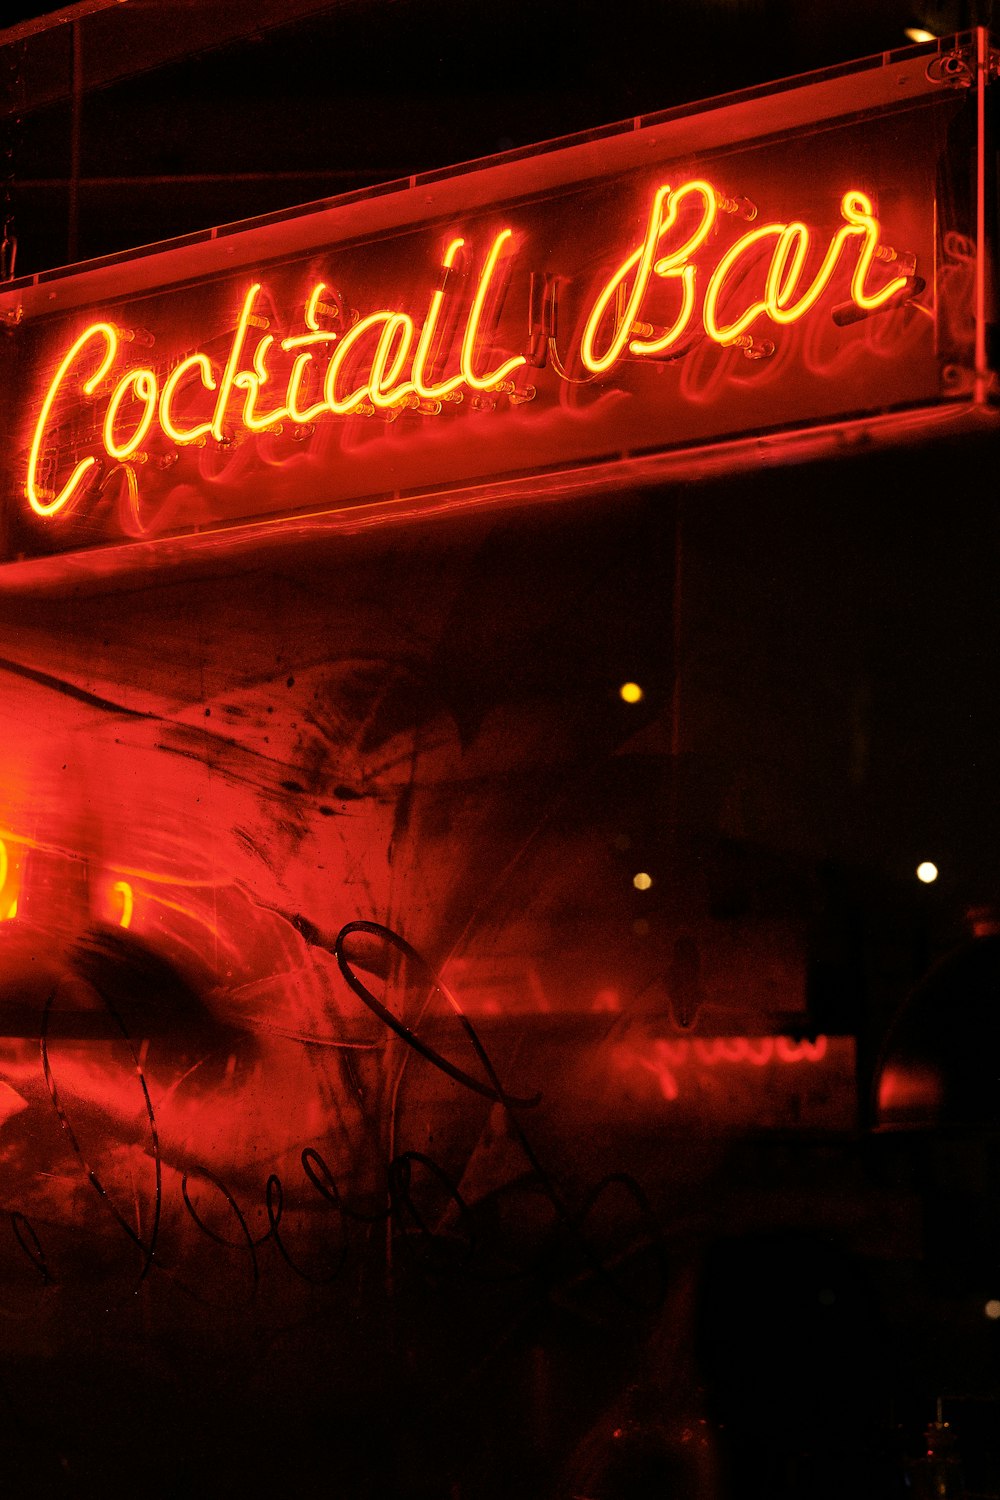 Coctail Bar neon light signage